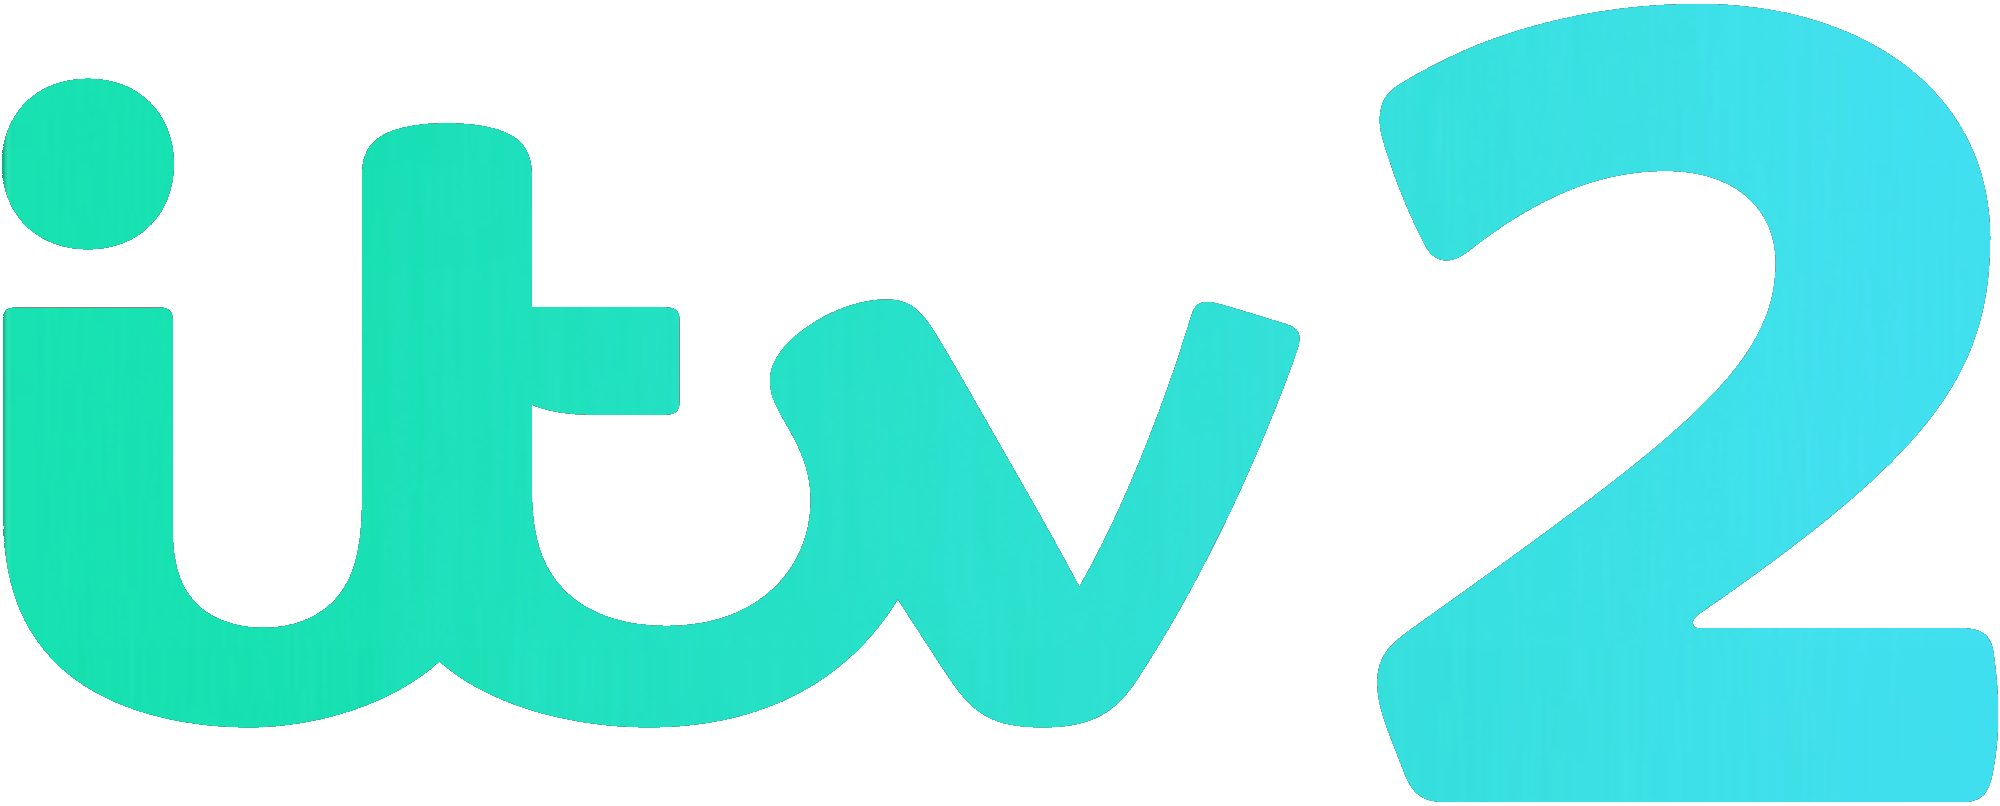 ITV 1 HD PlusPng.com 